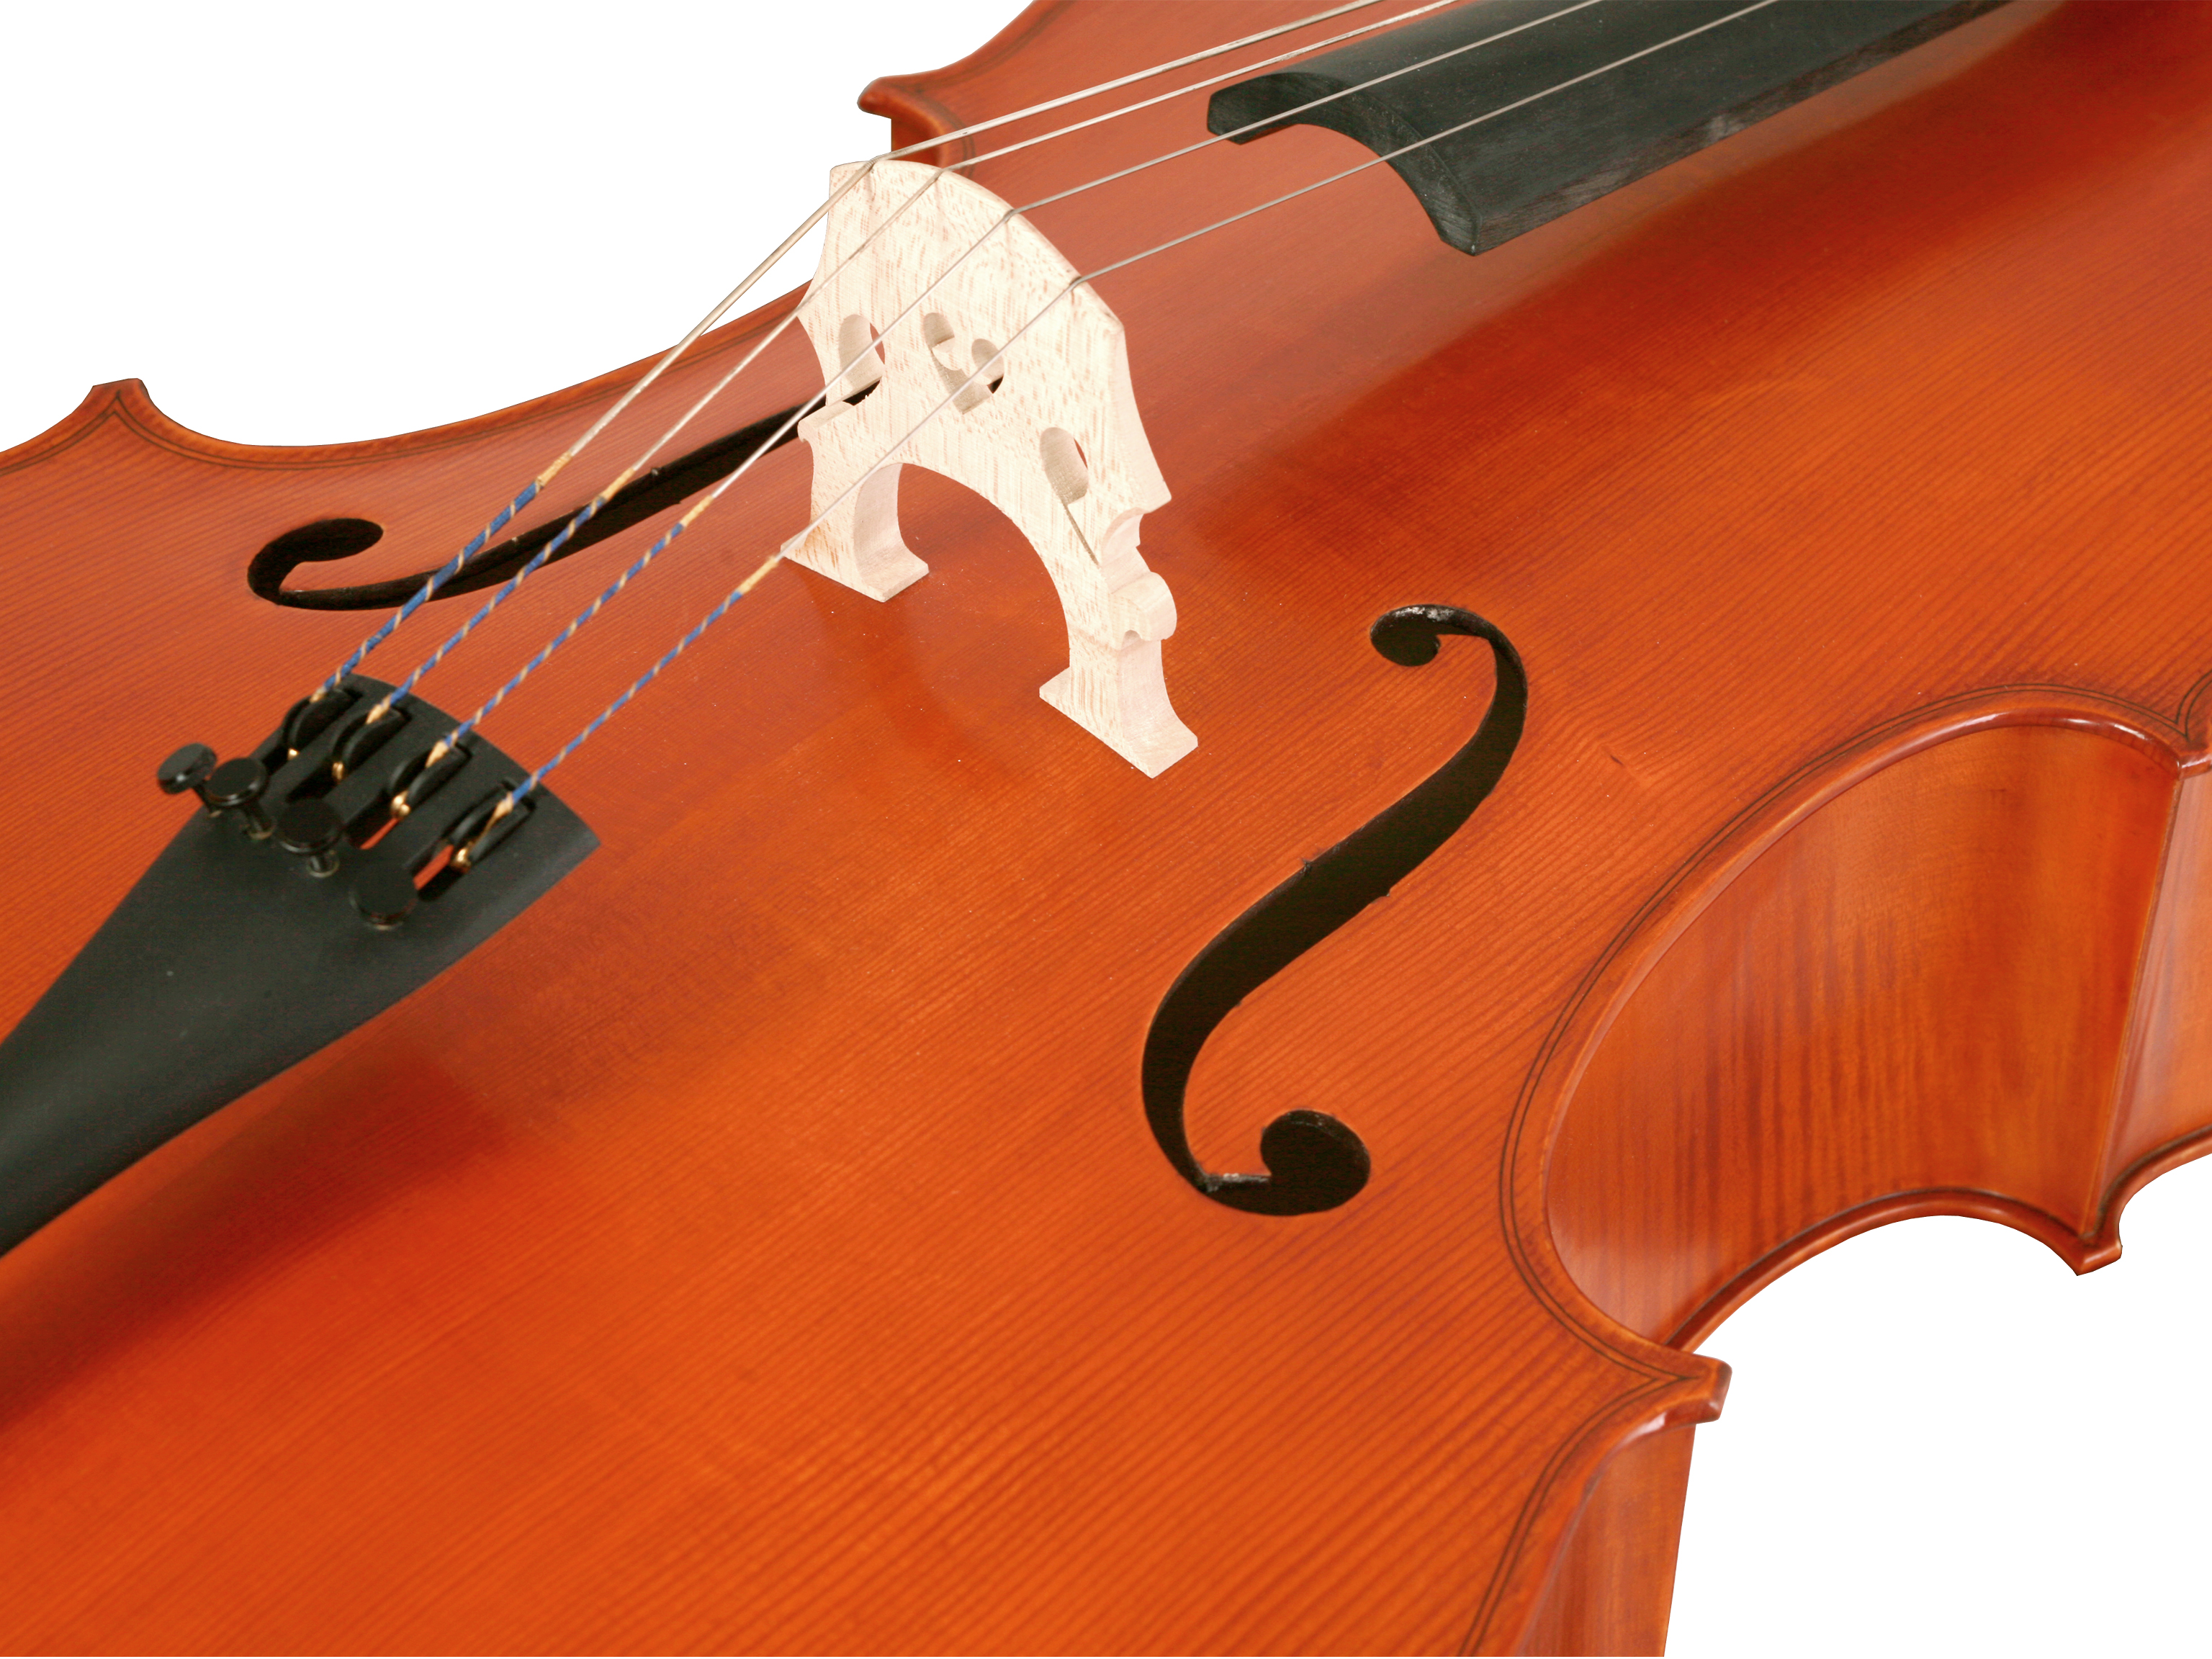 Sandner 8220-2 Cello 4/4 Schülermodell